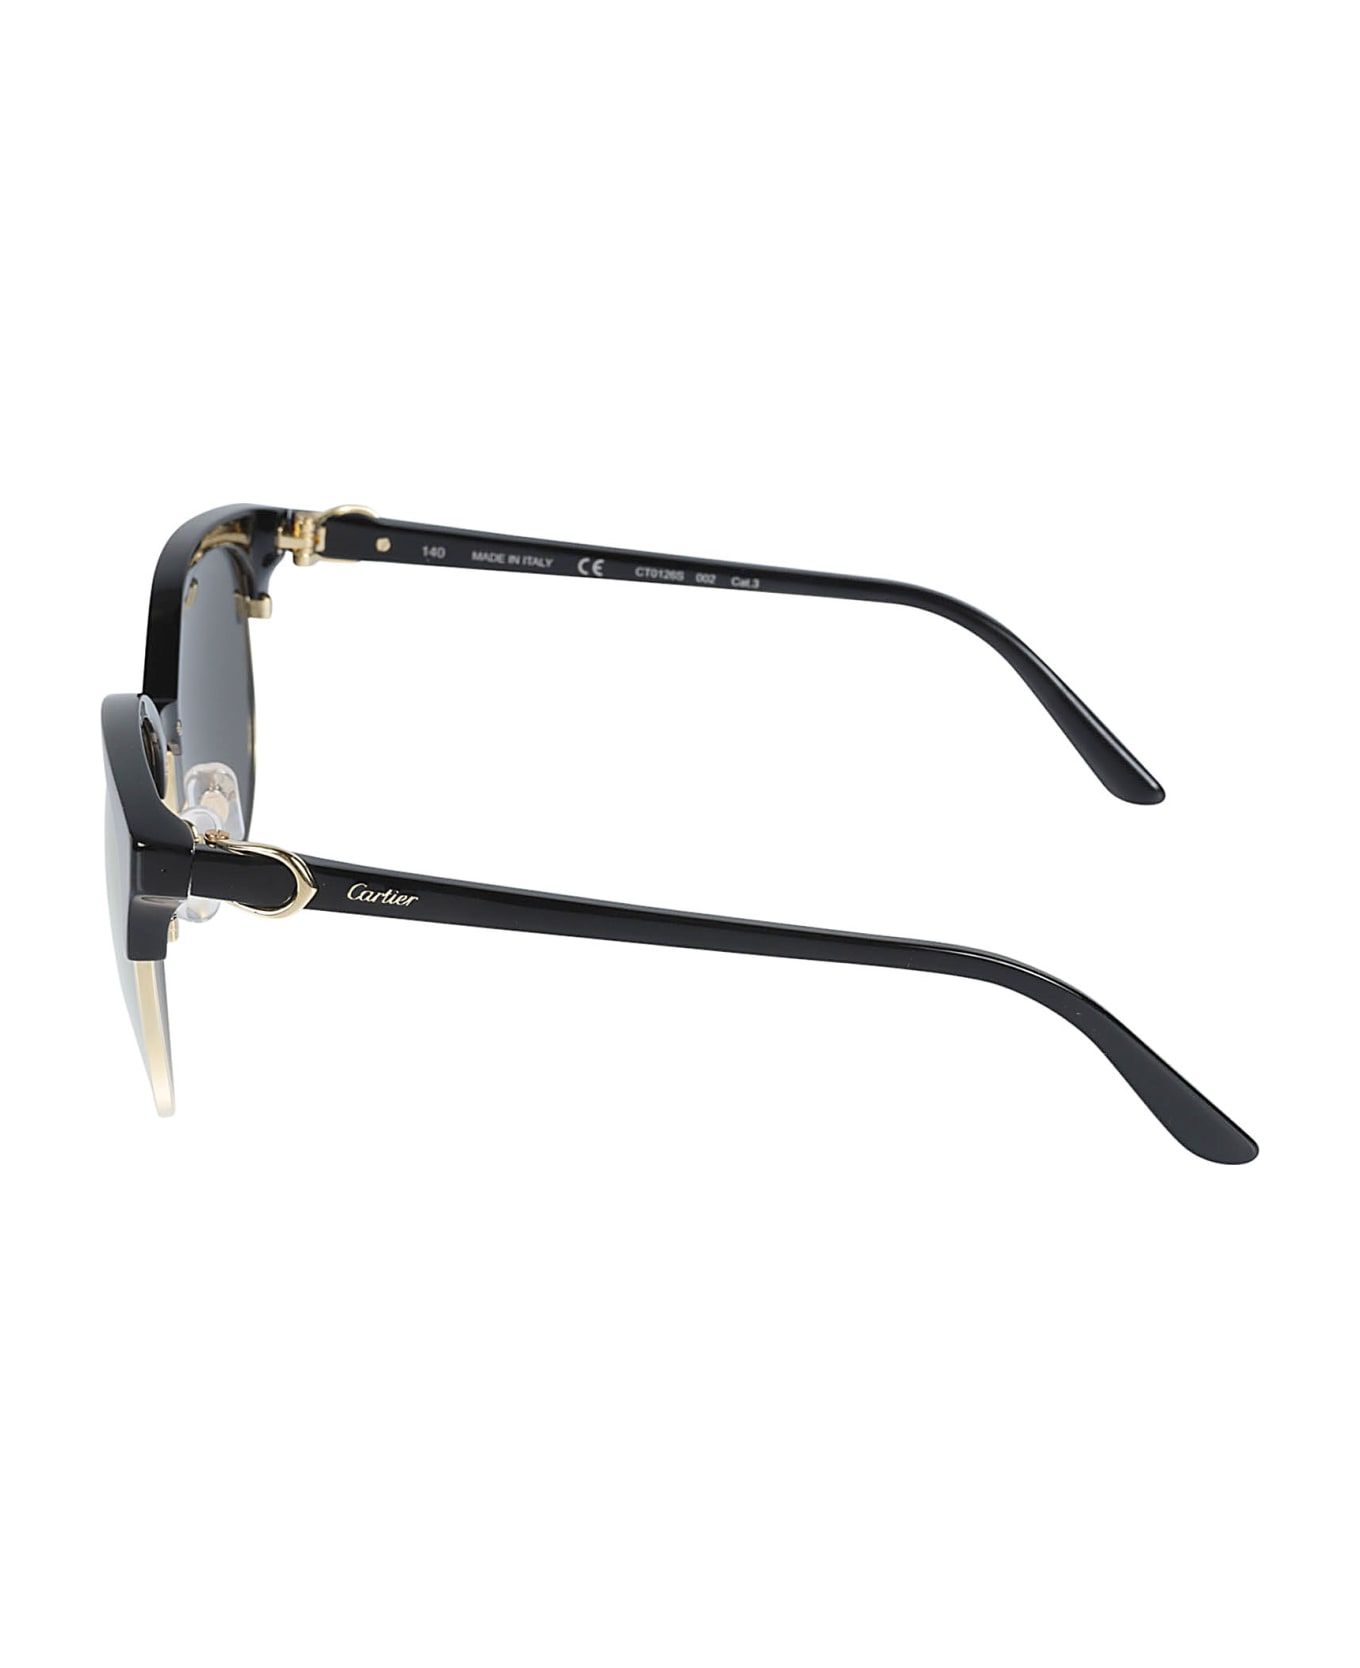 Cartier Eyewear Clubmaster Style Sunglasses - Black サングラス